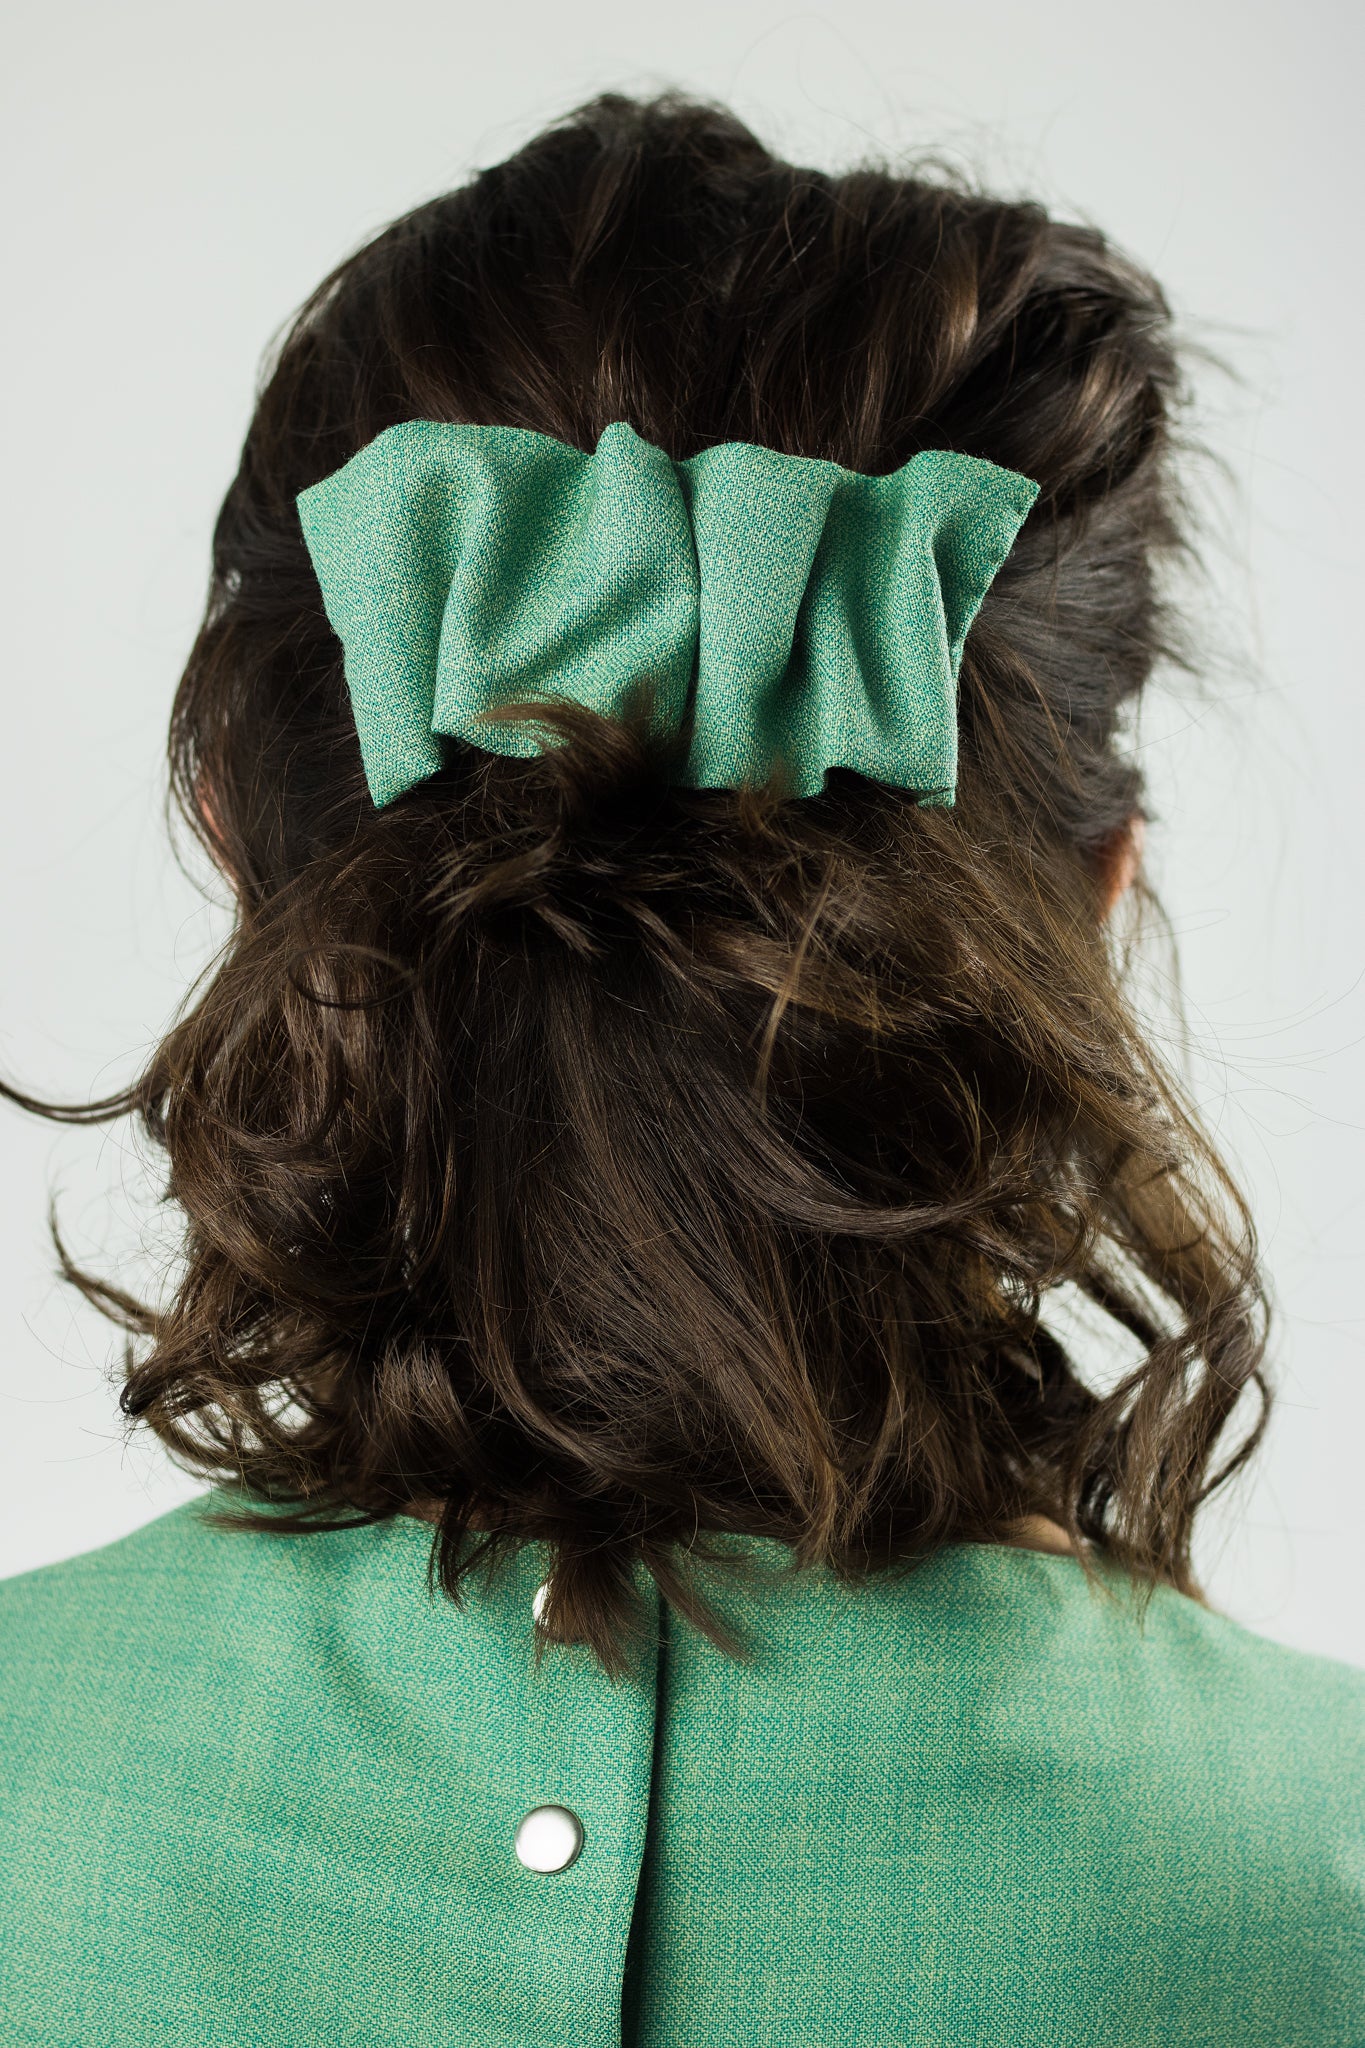 mint green hair clip pinned in the hair